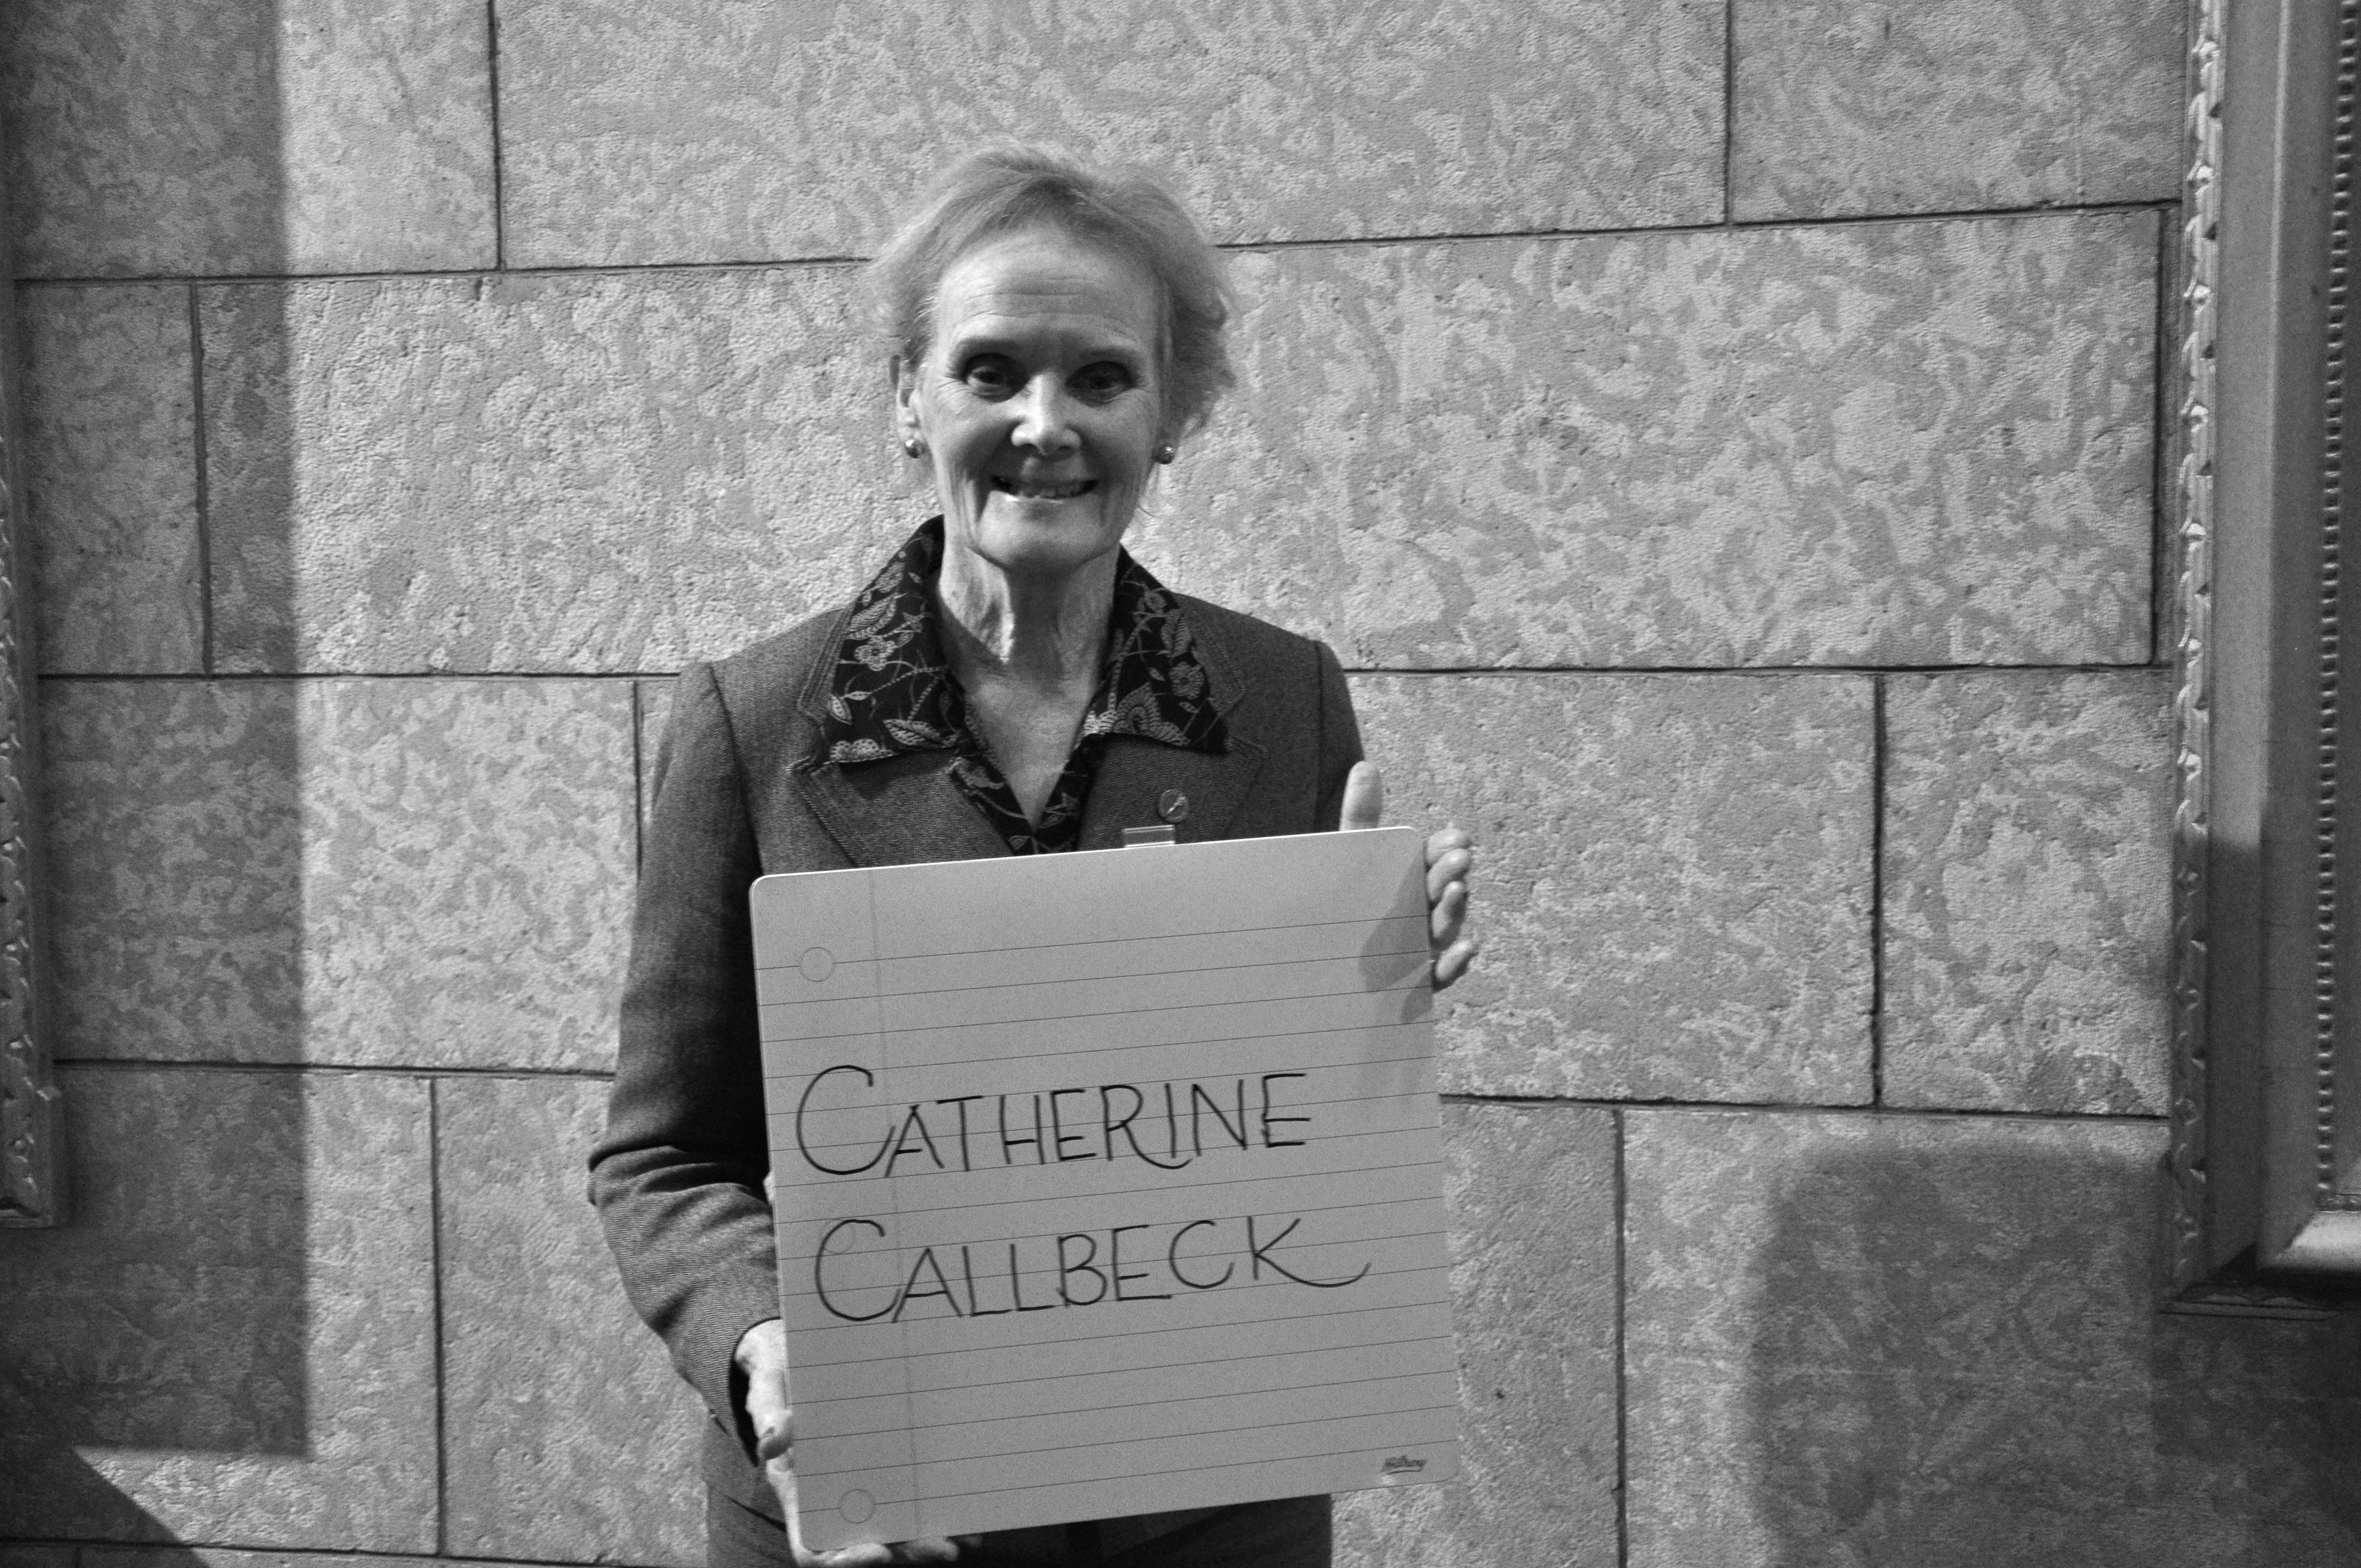 Senator Elizabeth Hubley is inspired by Catherine Callbeck.